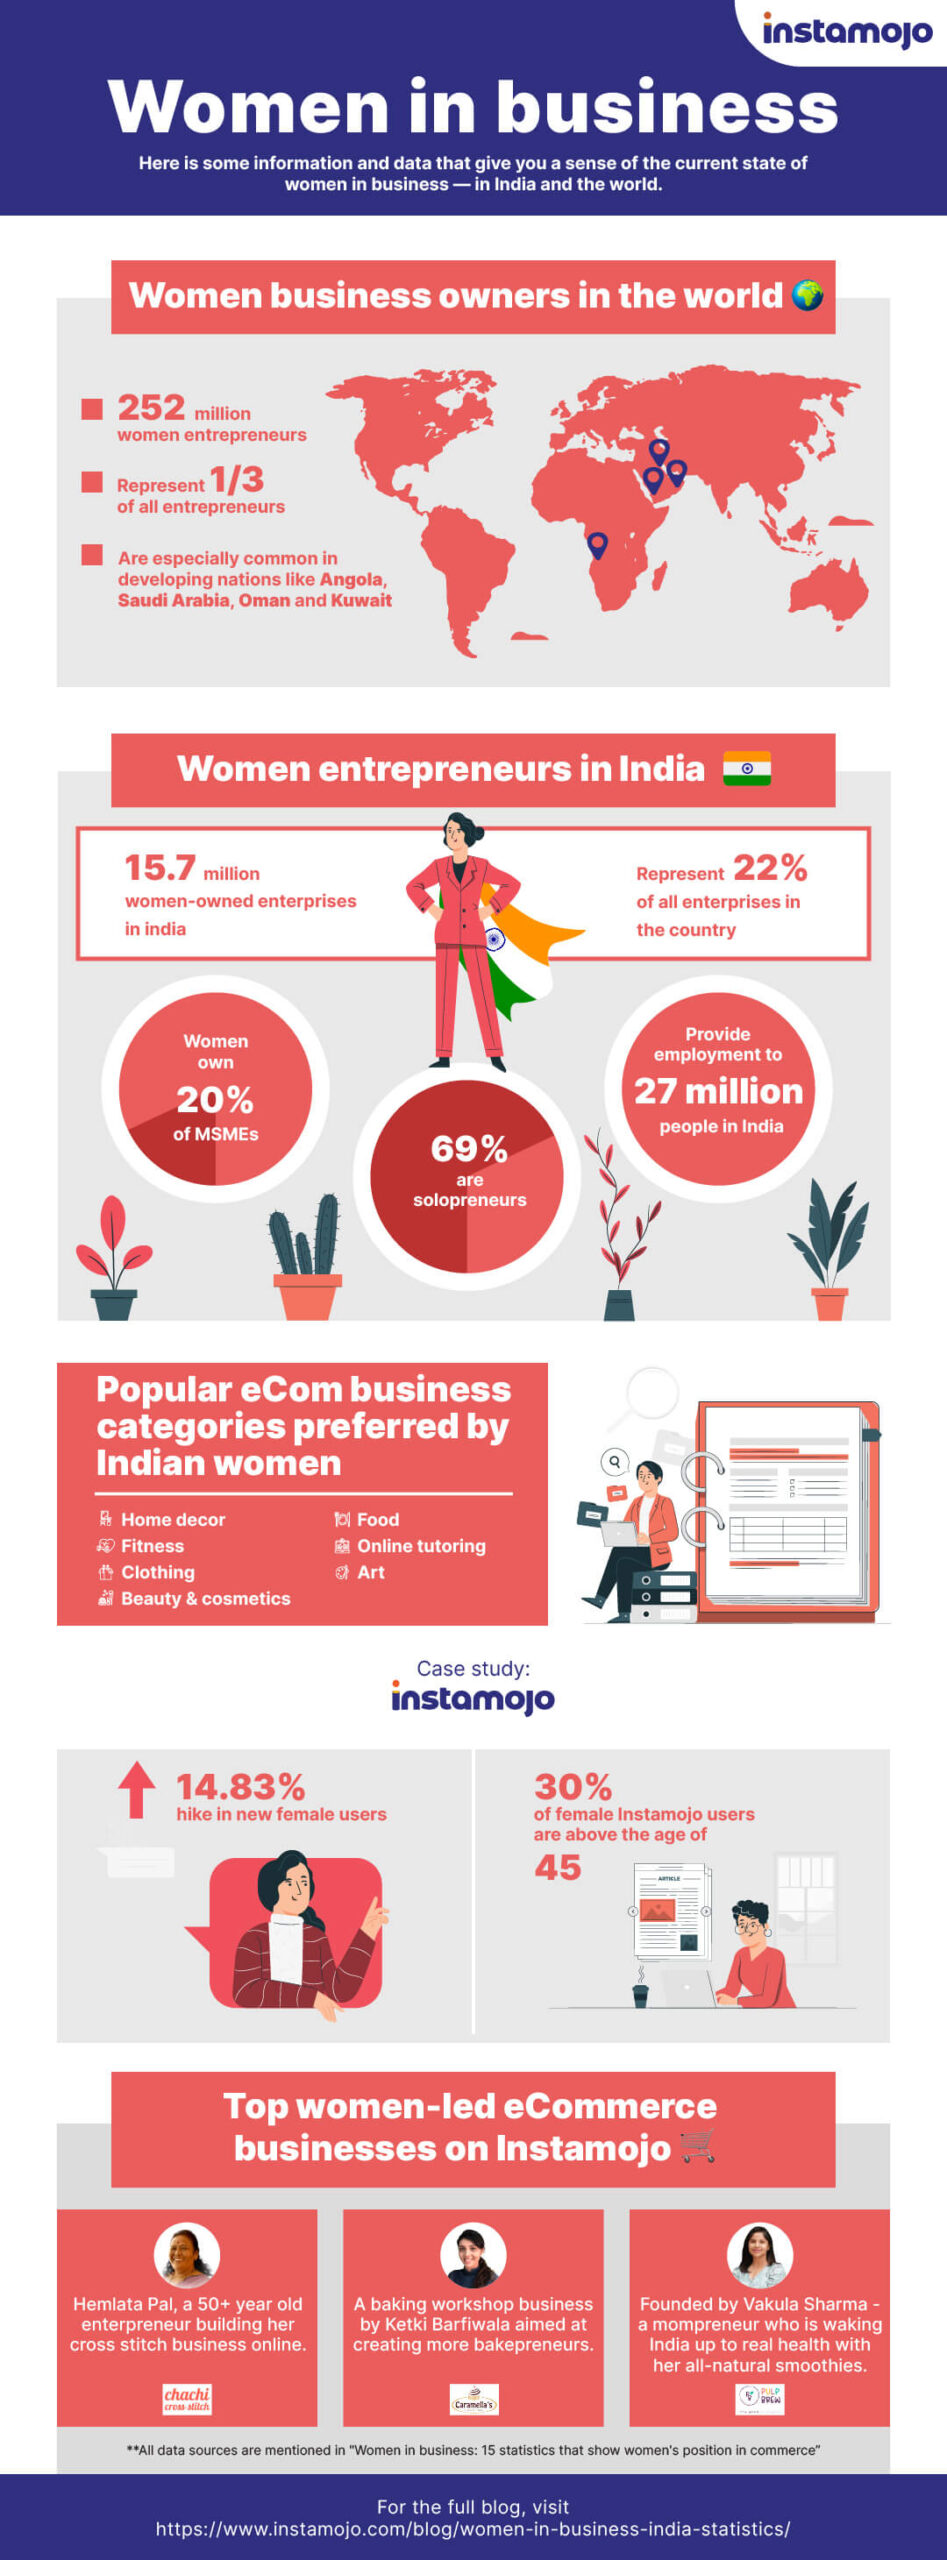 women in business statistics infographic